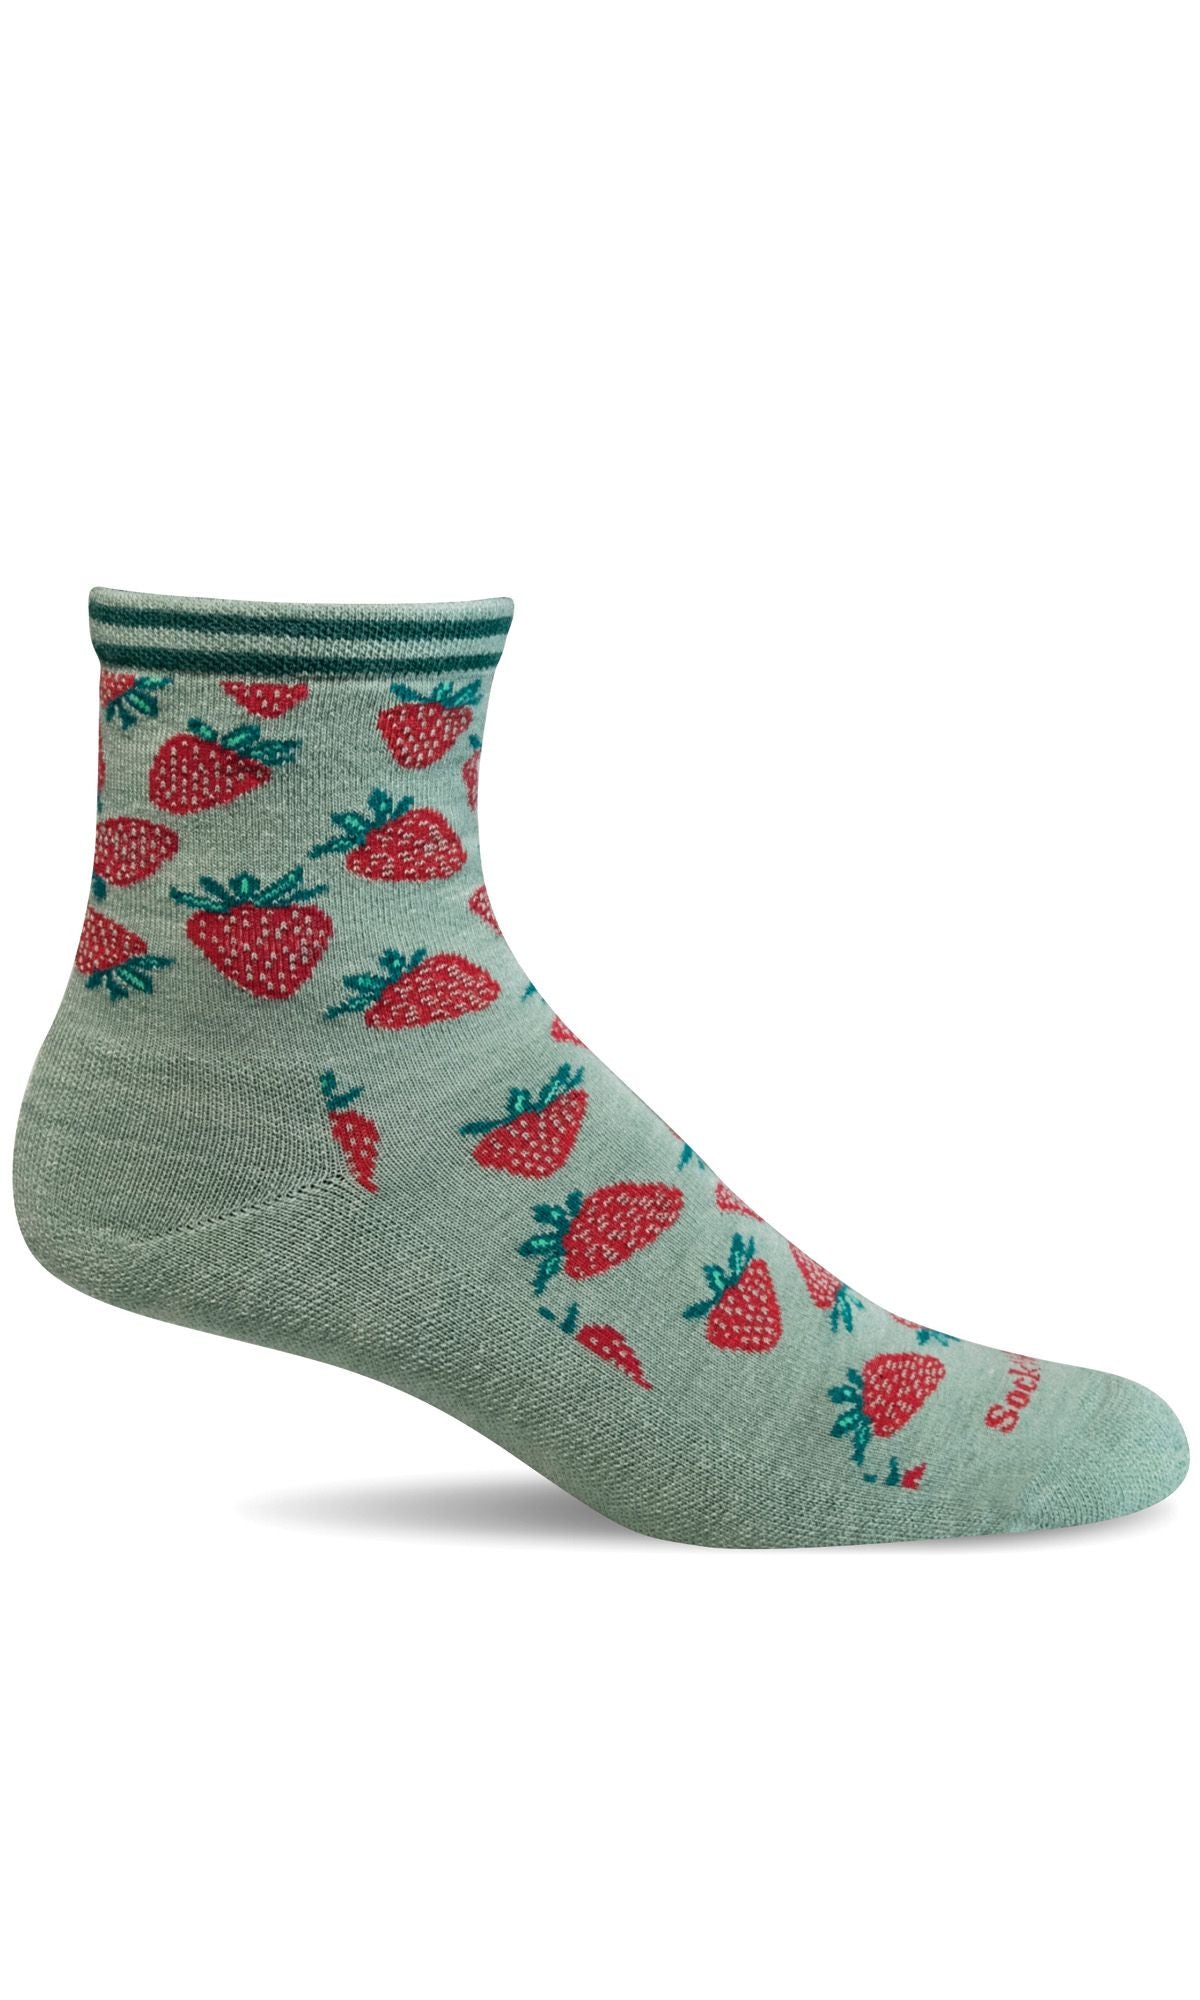 Sockwell Strawberry Essential Comfort Socks (Women’s)